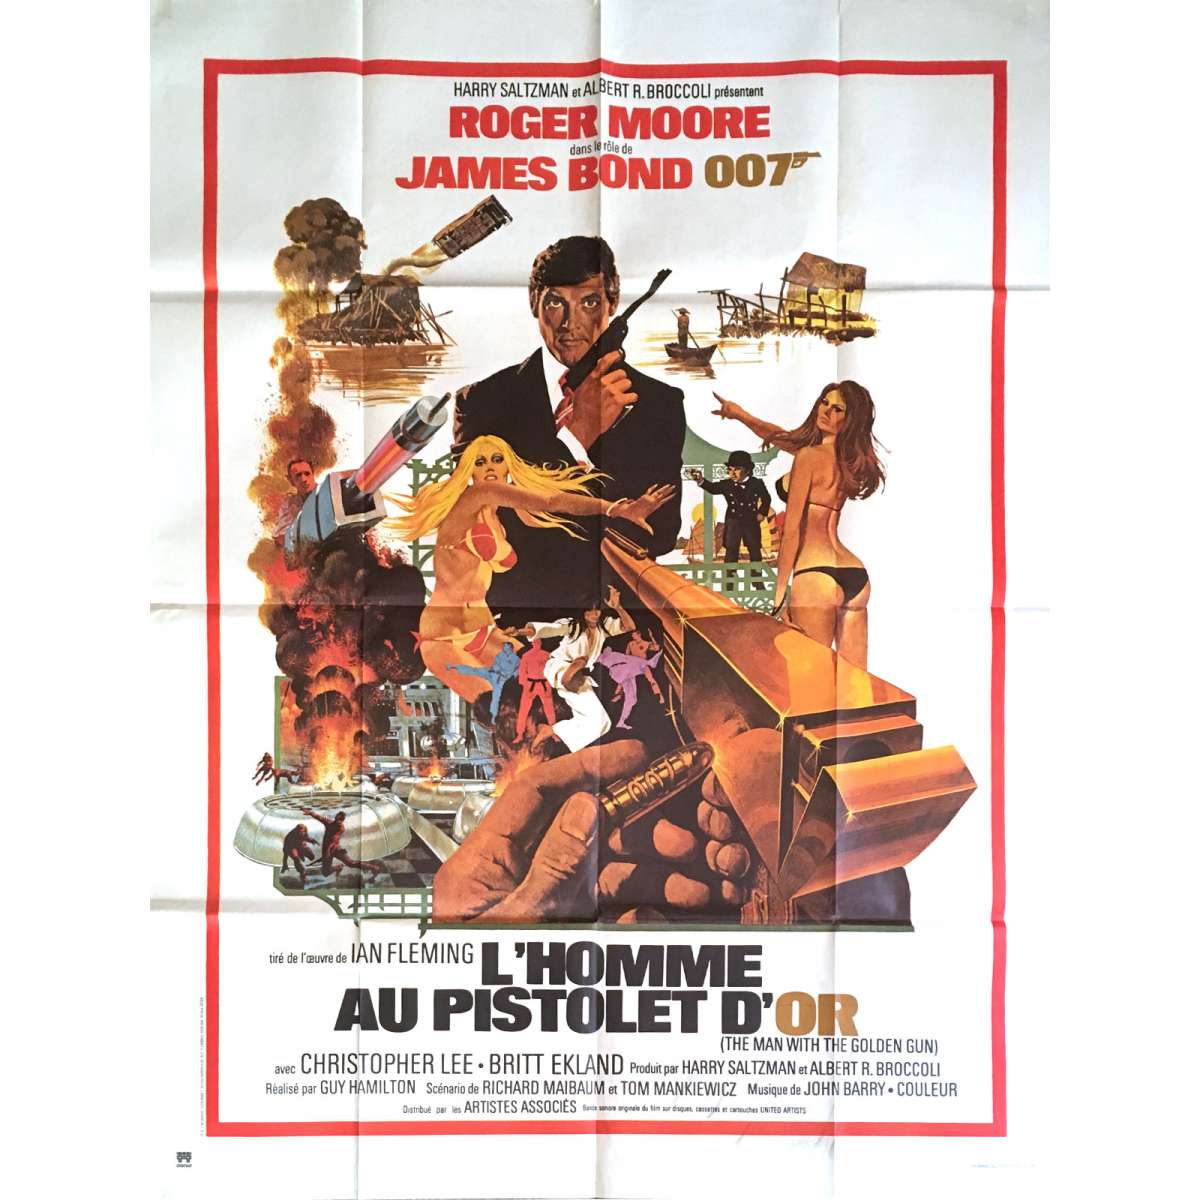 The Man With the Golden Gun FRIDGE MAGNET movie poster 